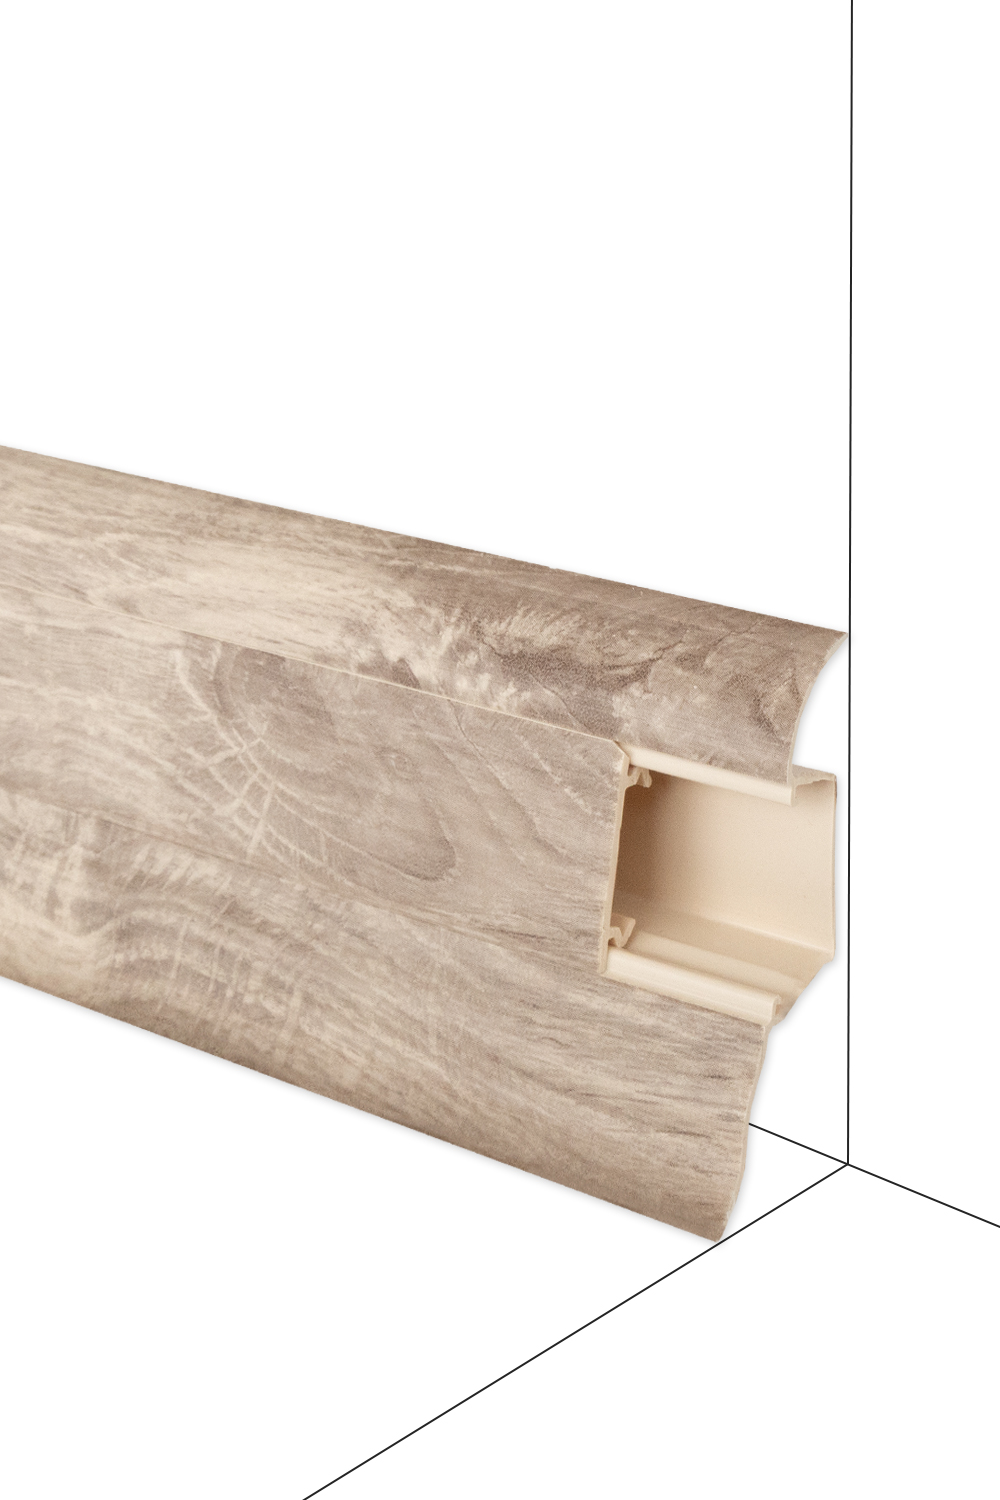 Podlahová lišta DOLLKEN W459 - Dub Superior - dĺžka 250 cm Ukončenie Ľ 